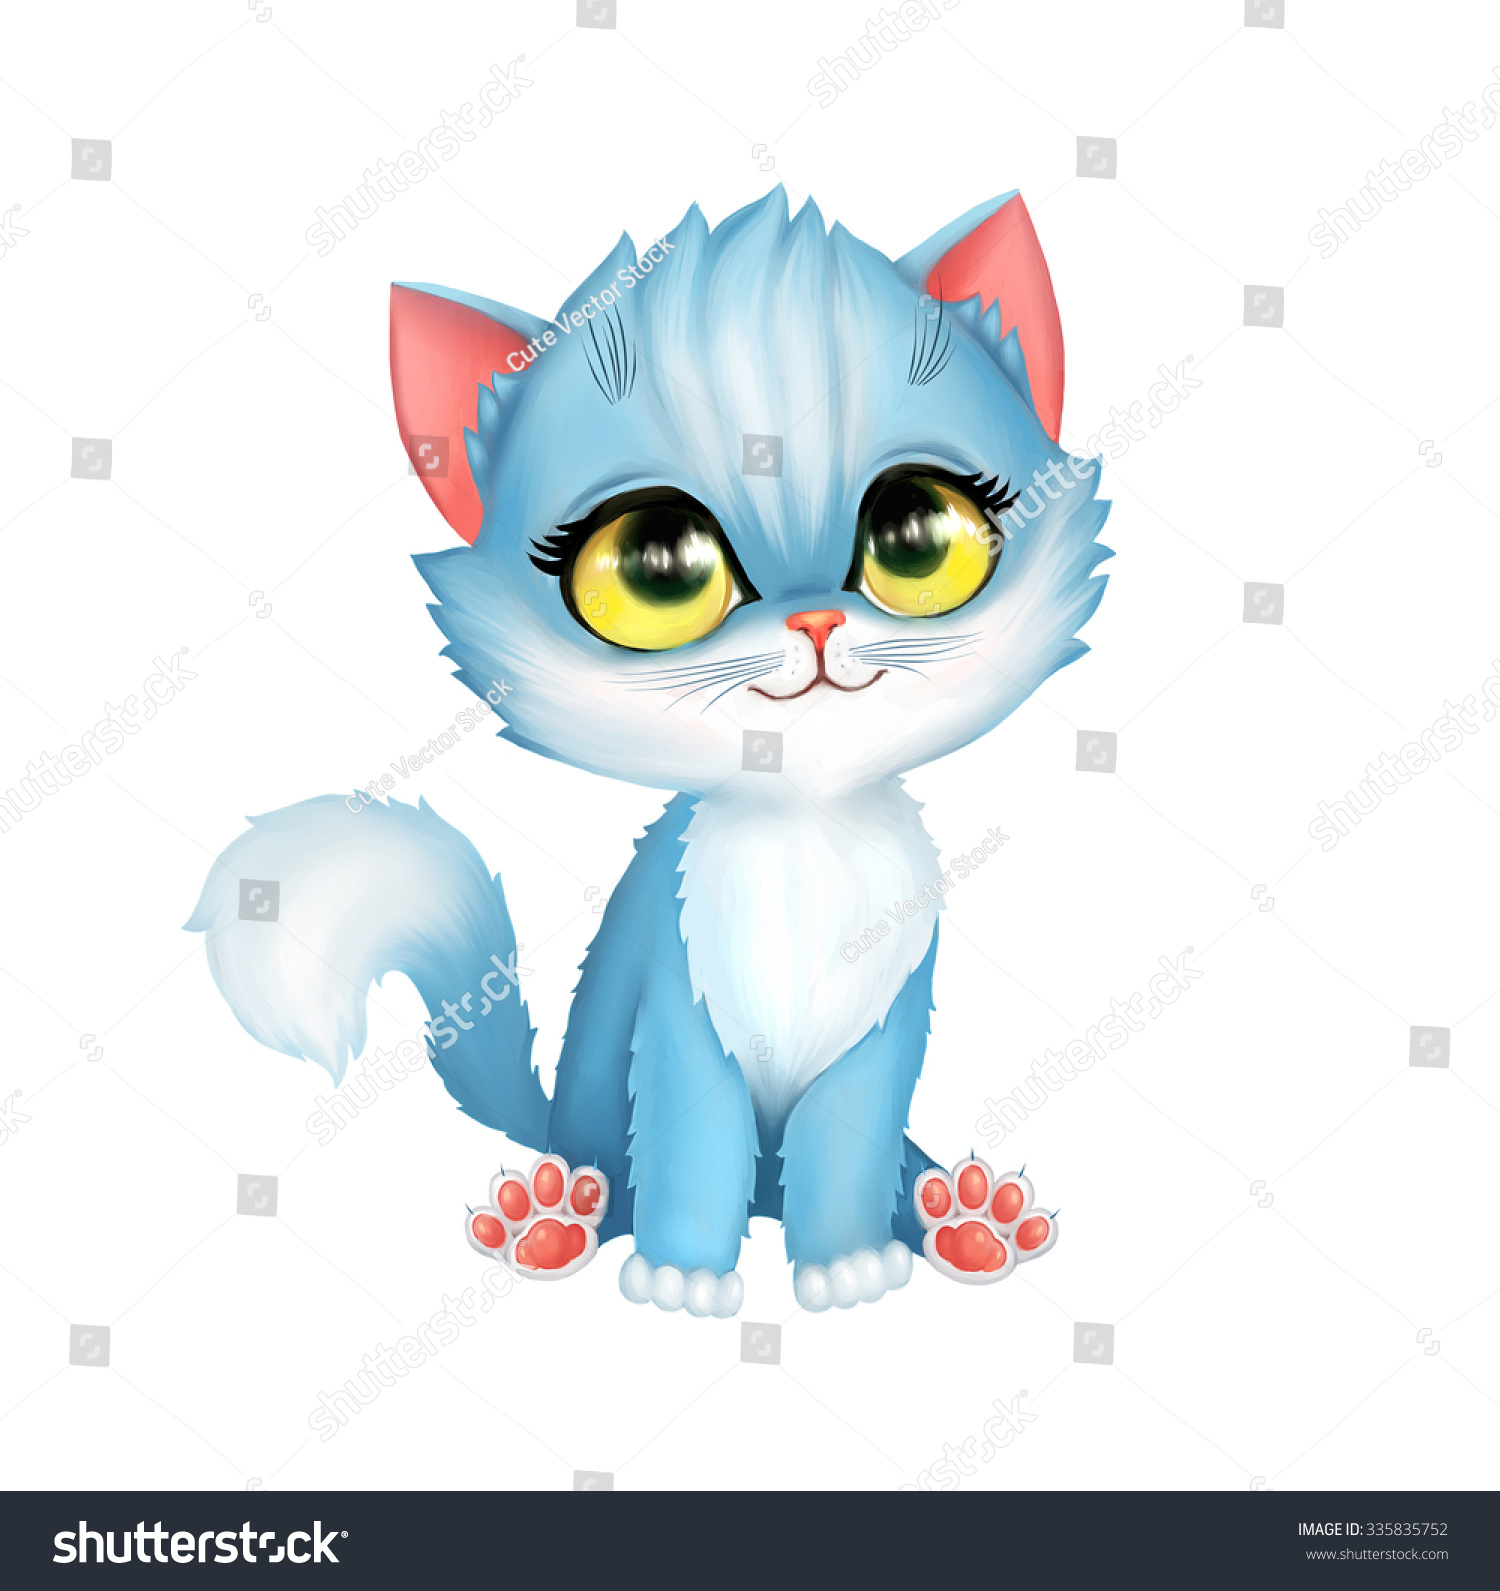 Illustration Of Cartoon Kitten With Big Eyes. Isolated